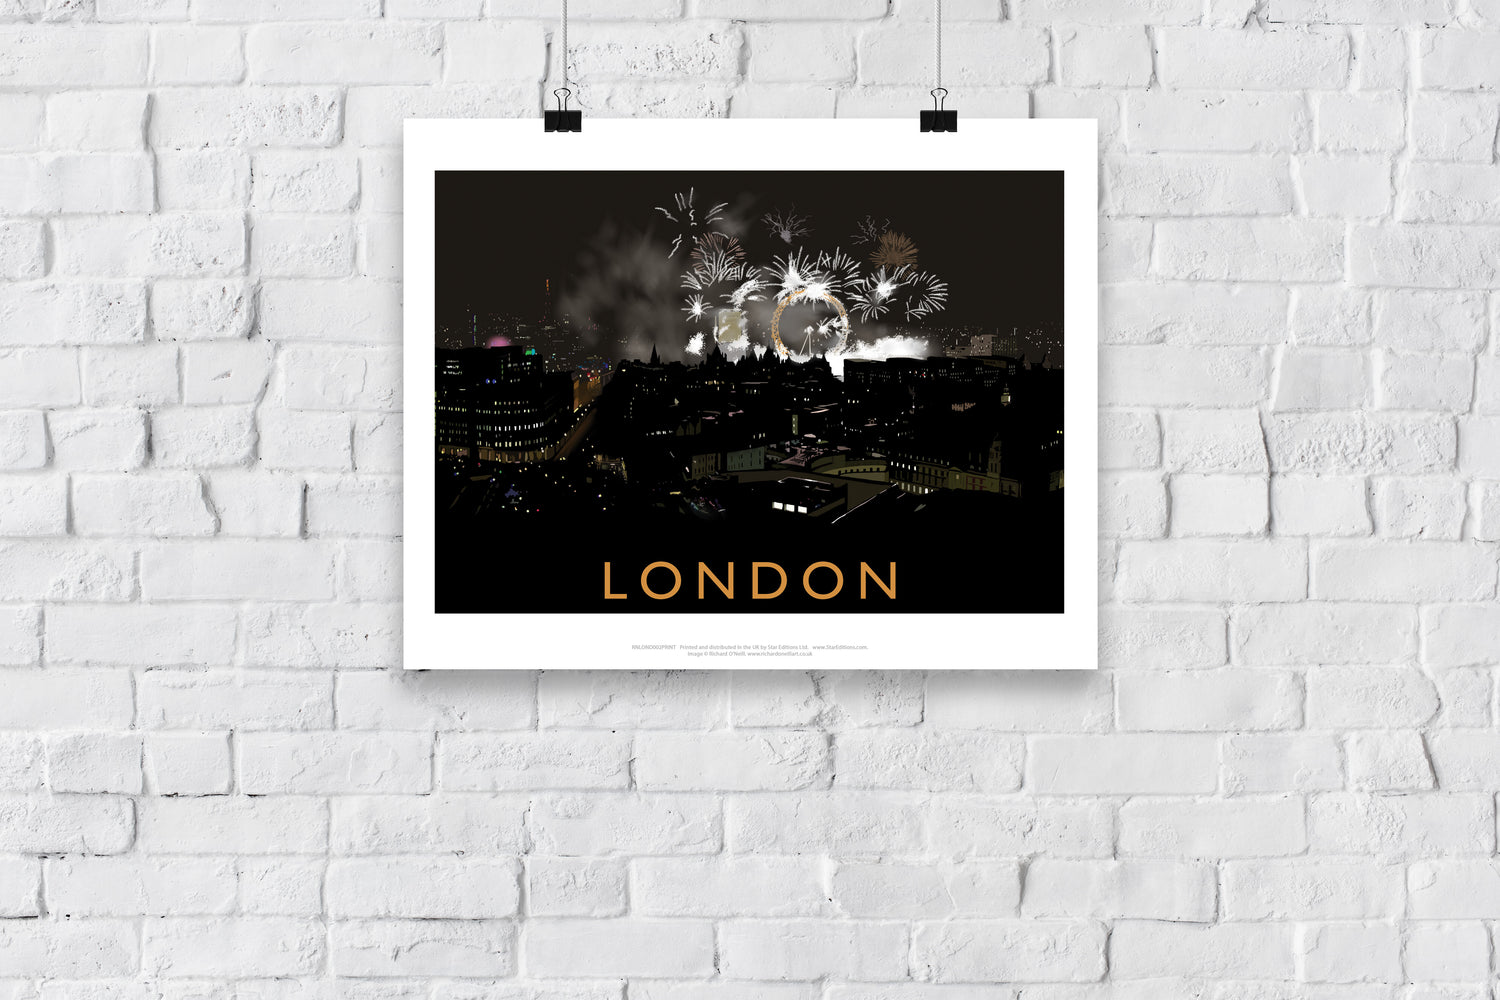 London at night - Art Print